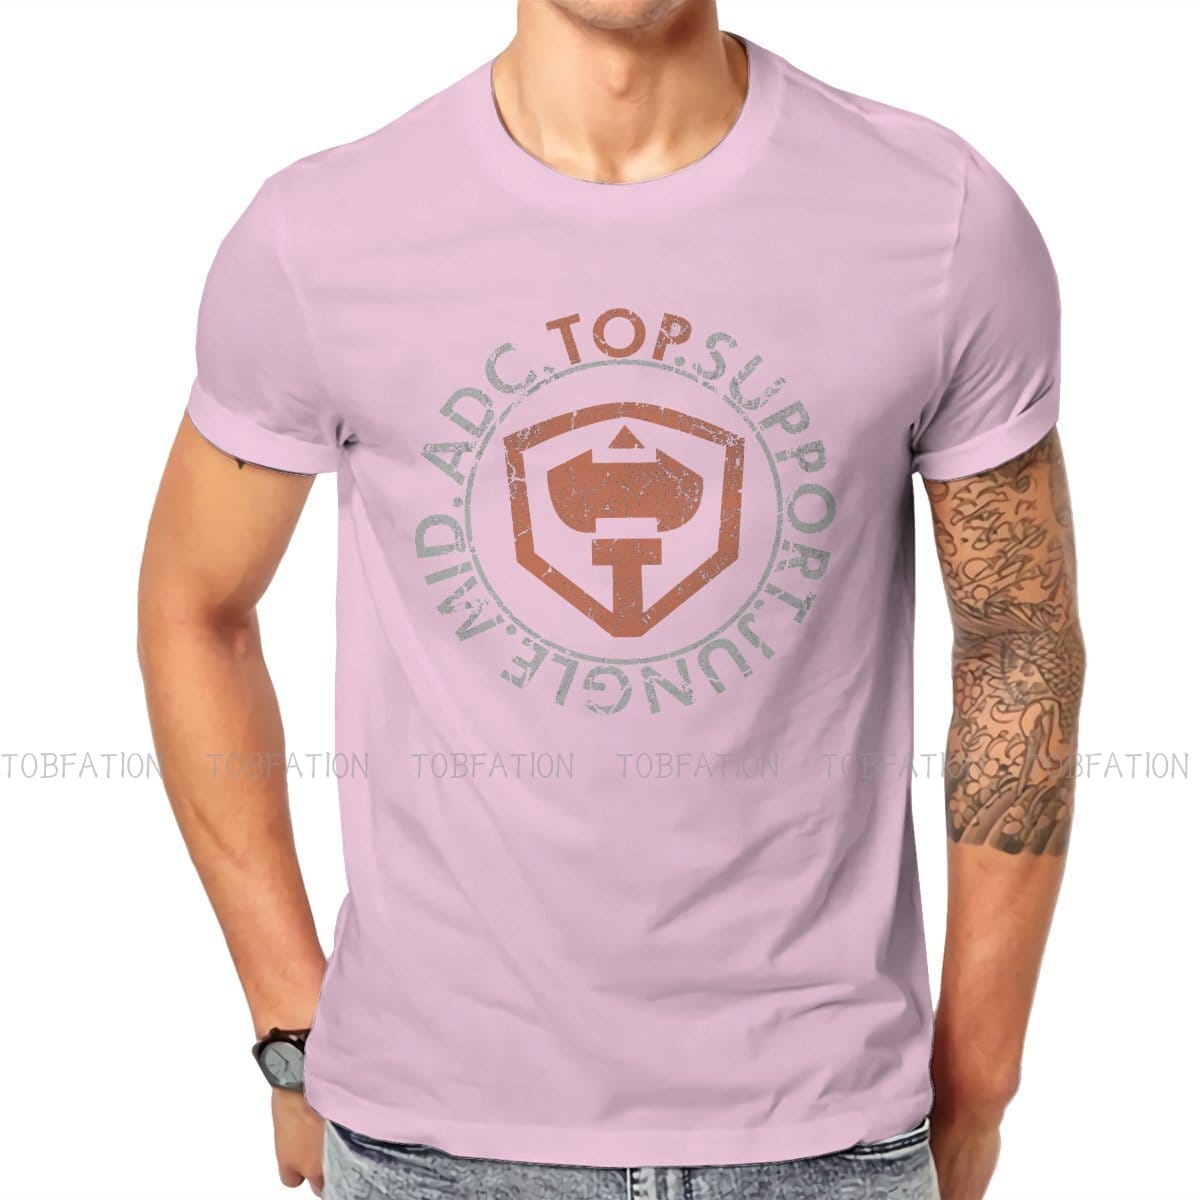 Top Lane Cotton Shirt